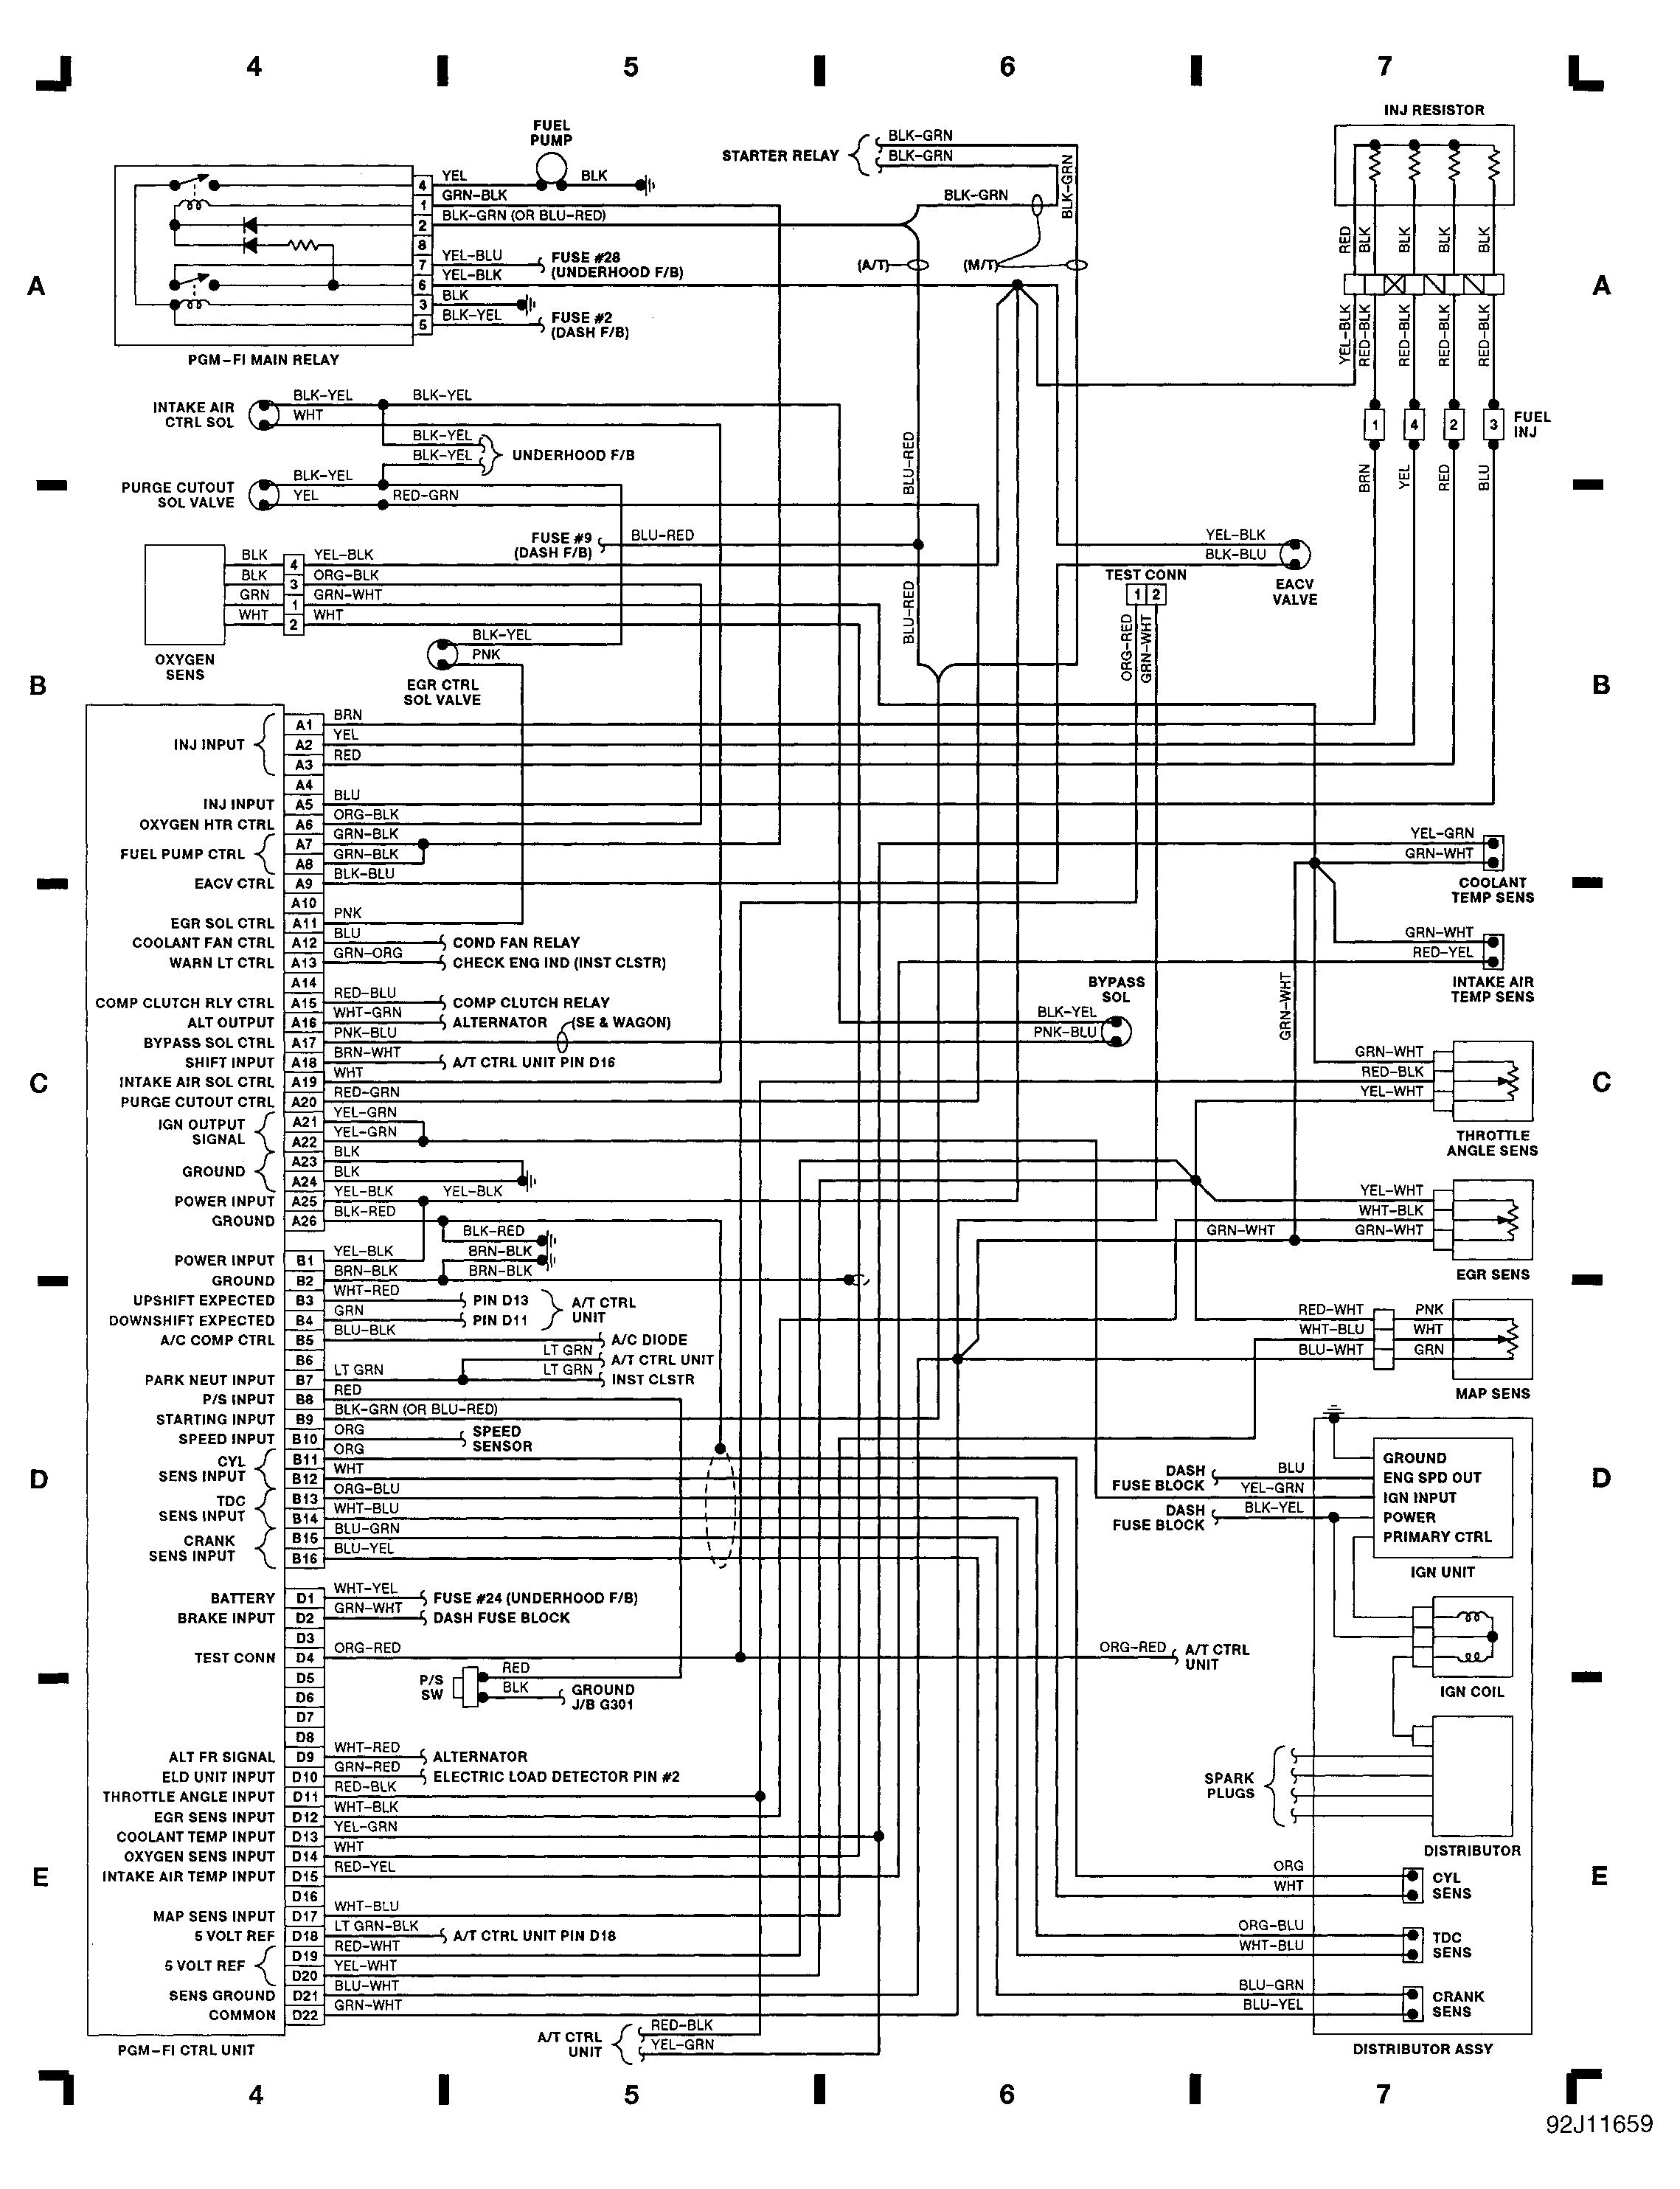 2001 Honda Accord V6 Engine Diagram 2005 Honda Accord Radio Schematic Diagram 2005 Circuit Diagrams Of 2001 Honda Accord V6 Engine Diagram